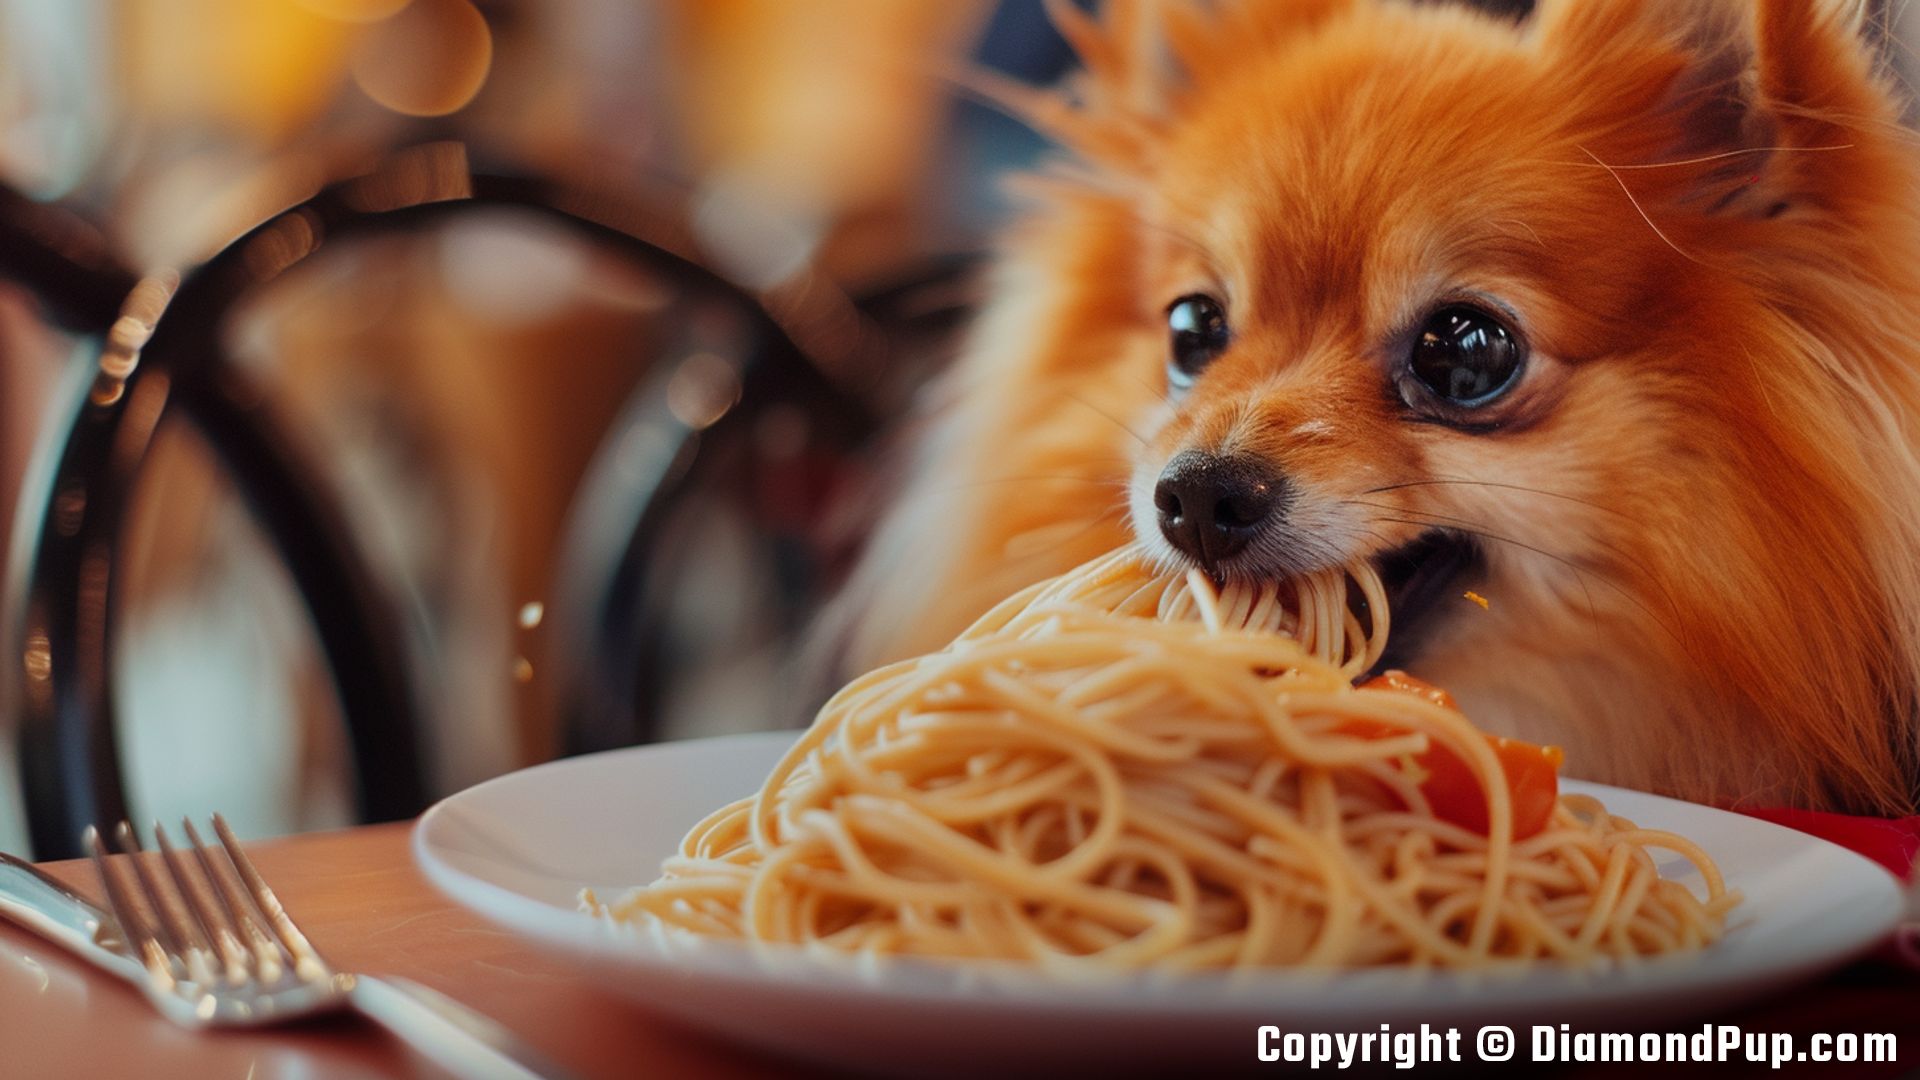 Photograph of an Adorable Pomeranian Eating Pasta